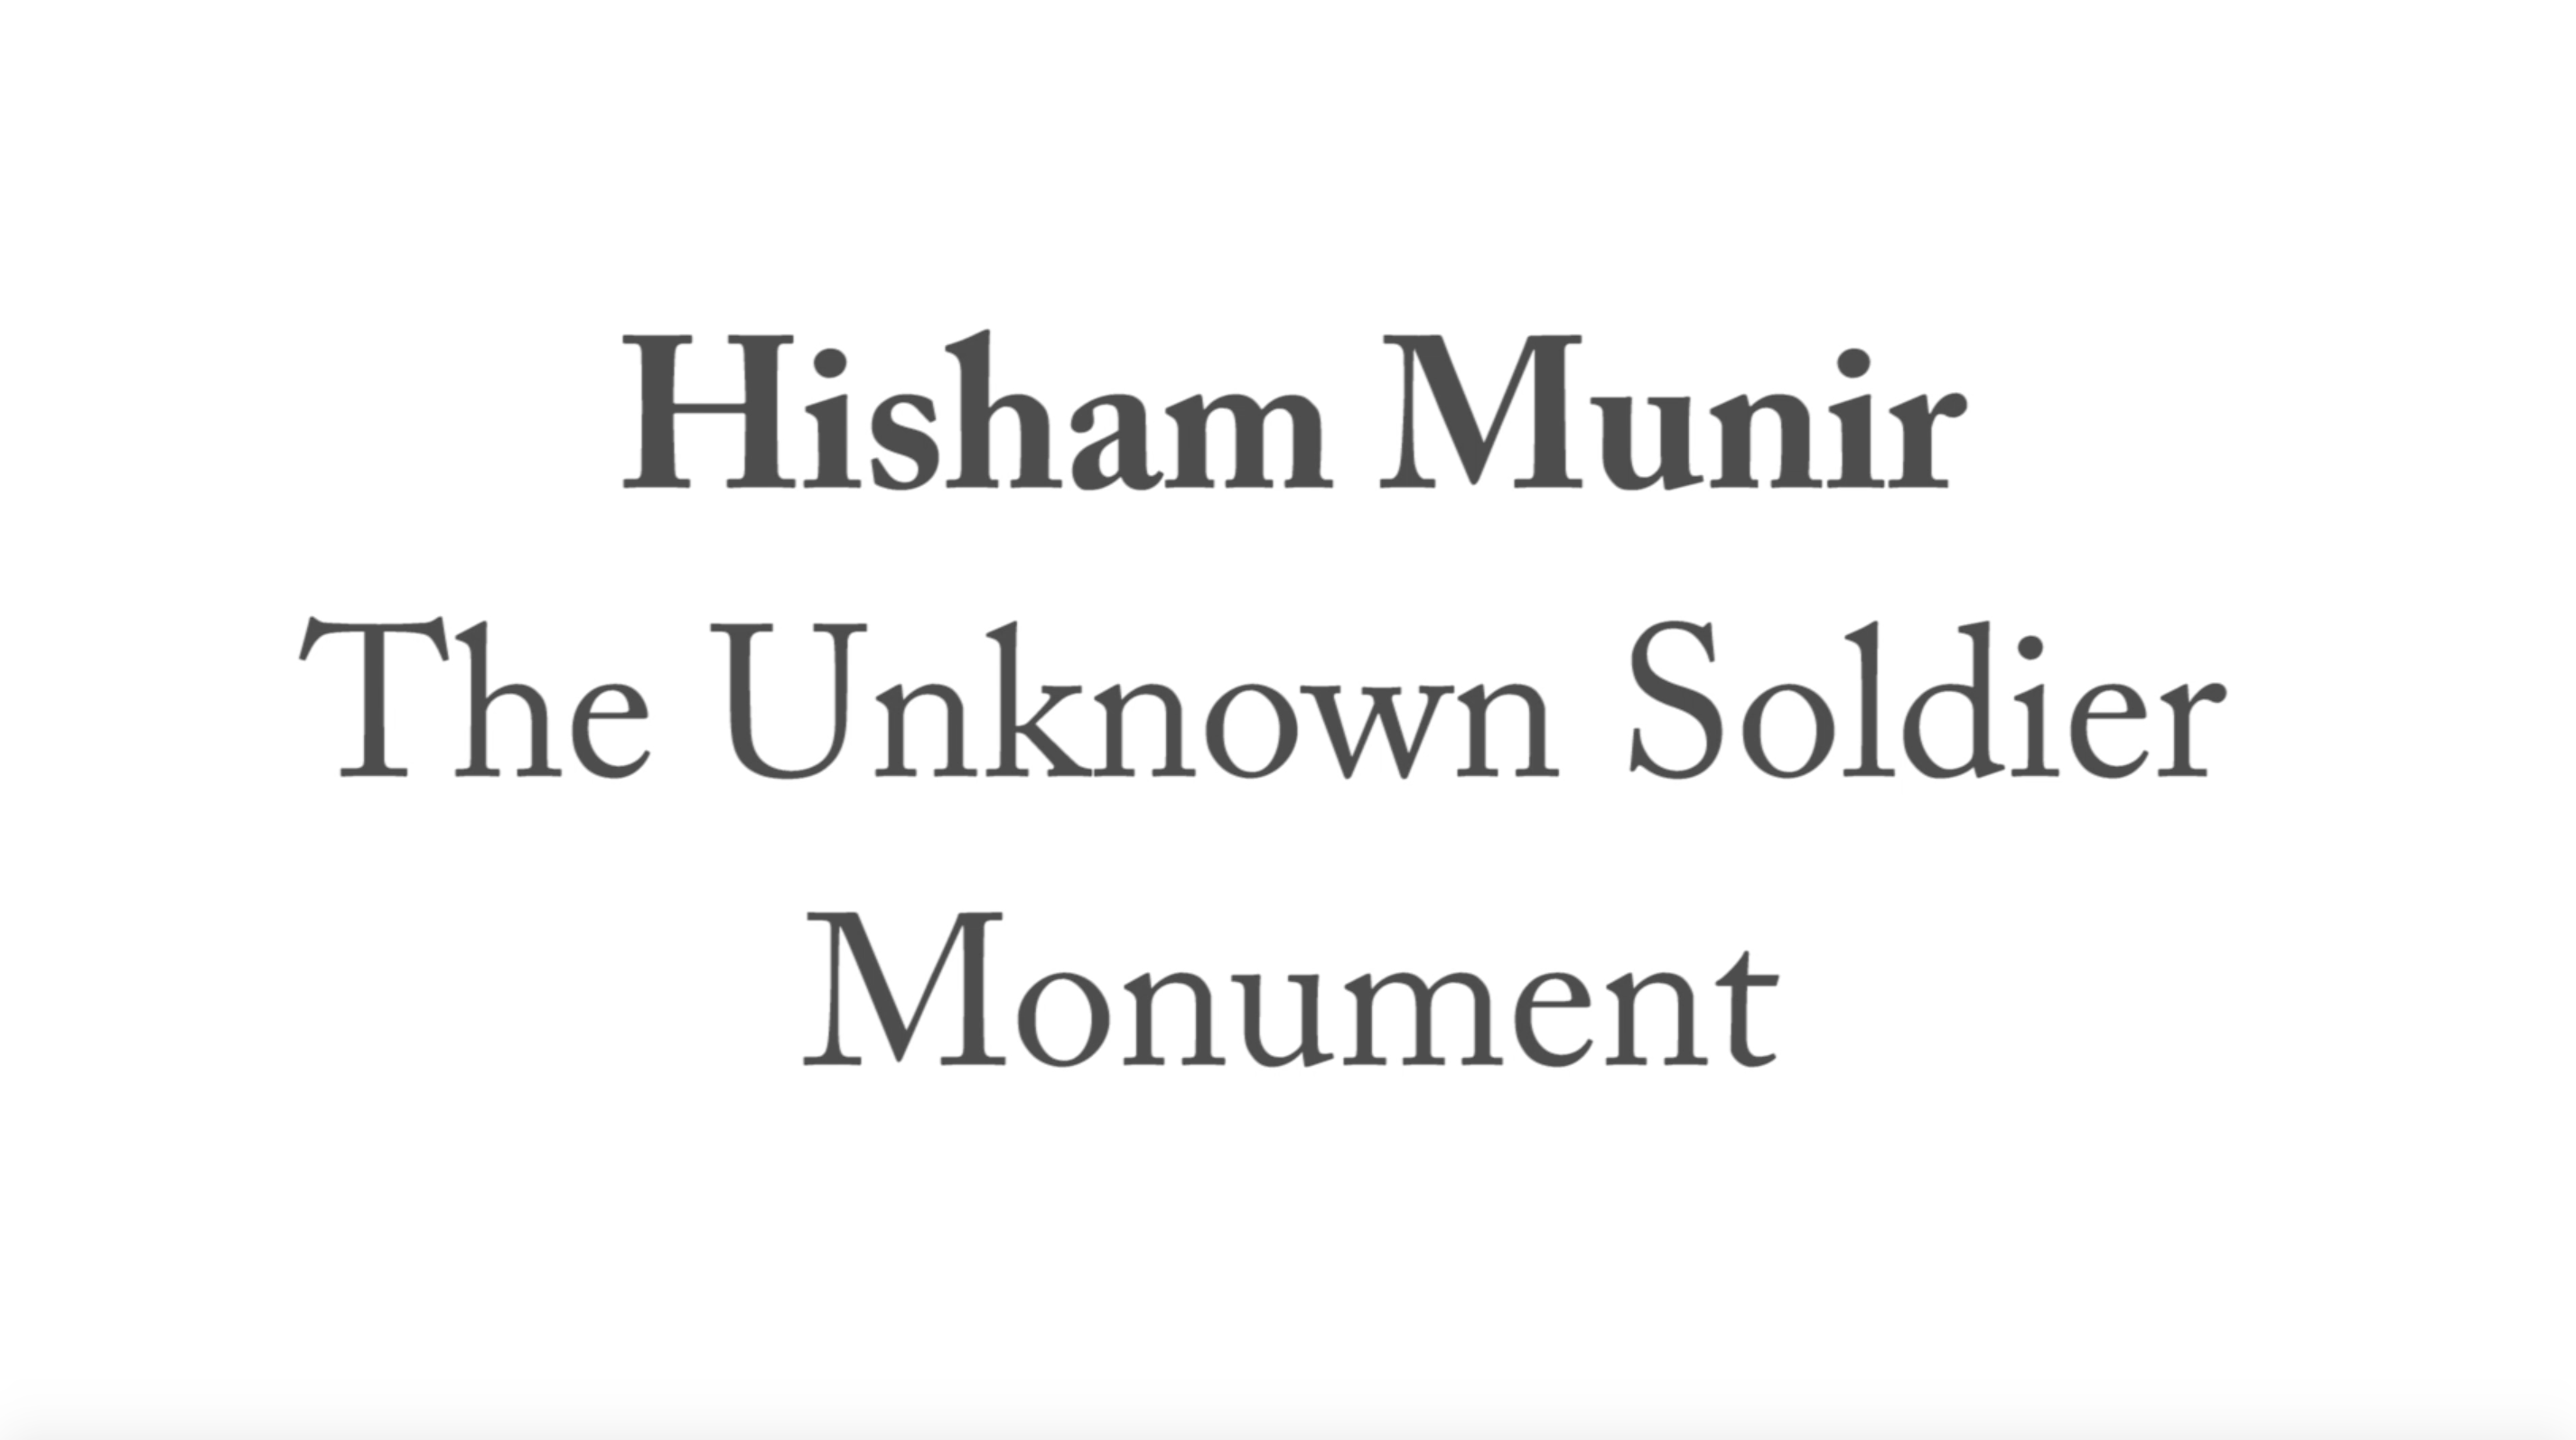 Hisham Munir and The Unknown Soldier Monument&nbsp;